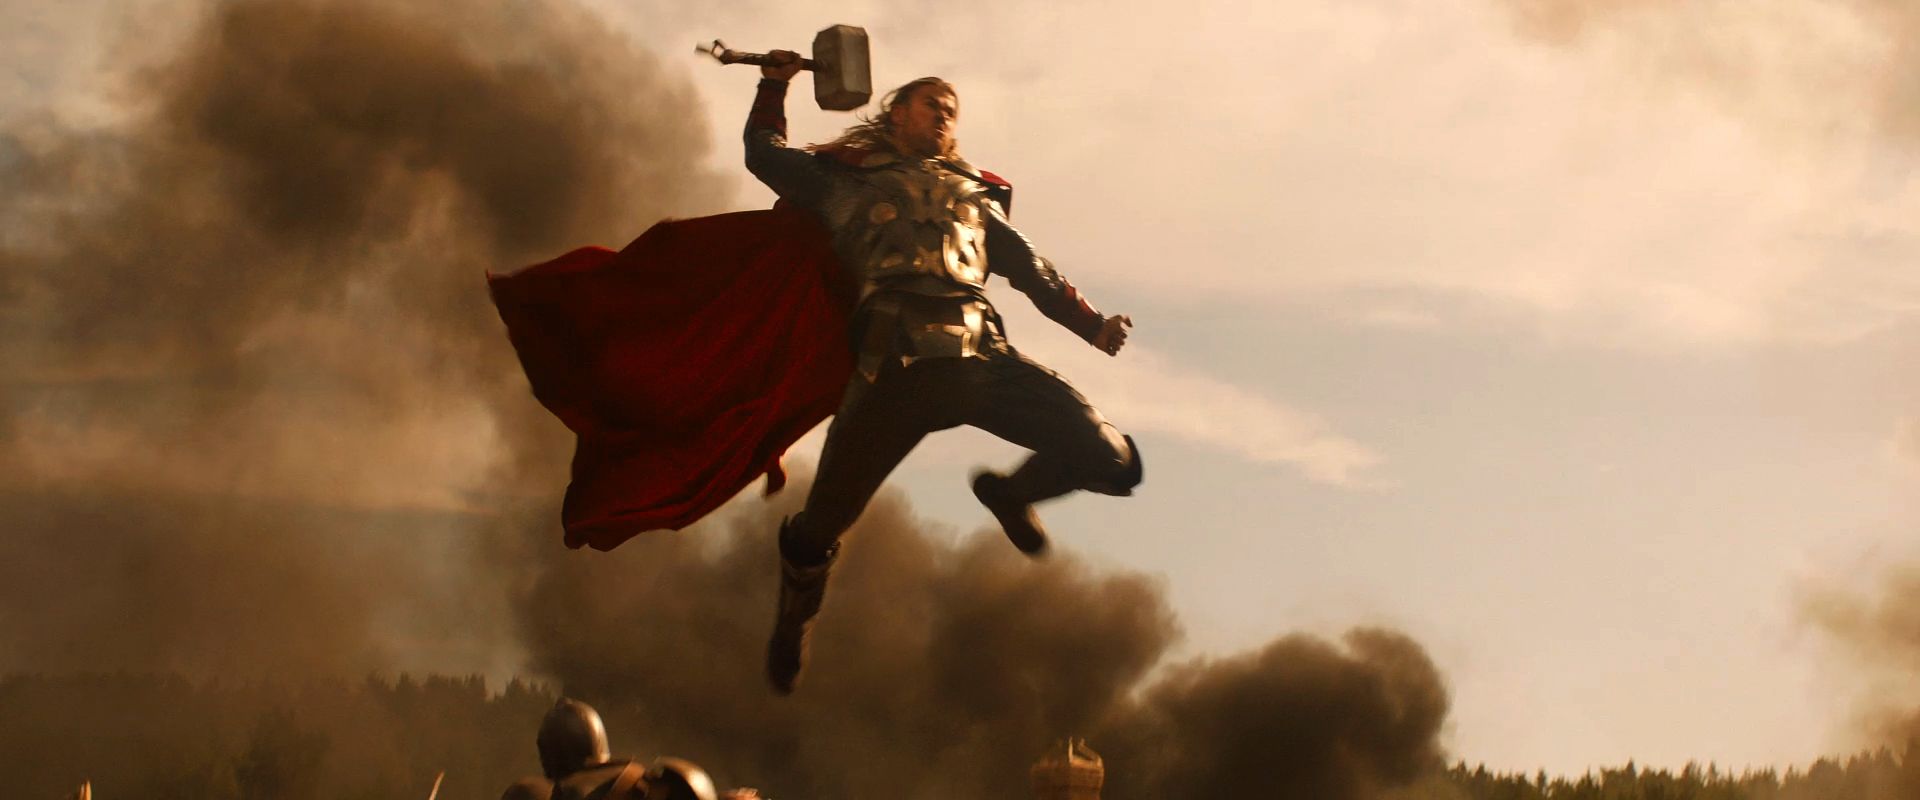 Thor: The Dark World Trailer Photo 5